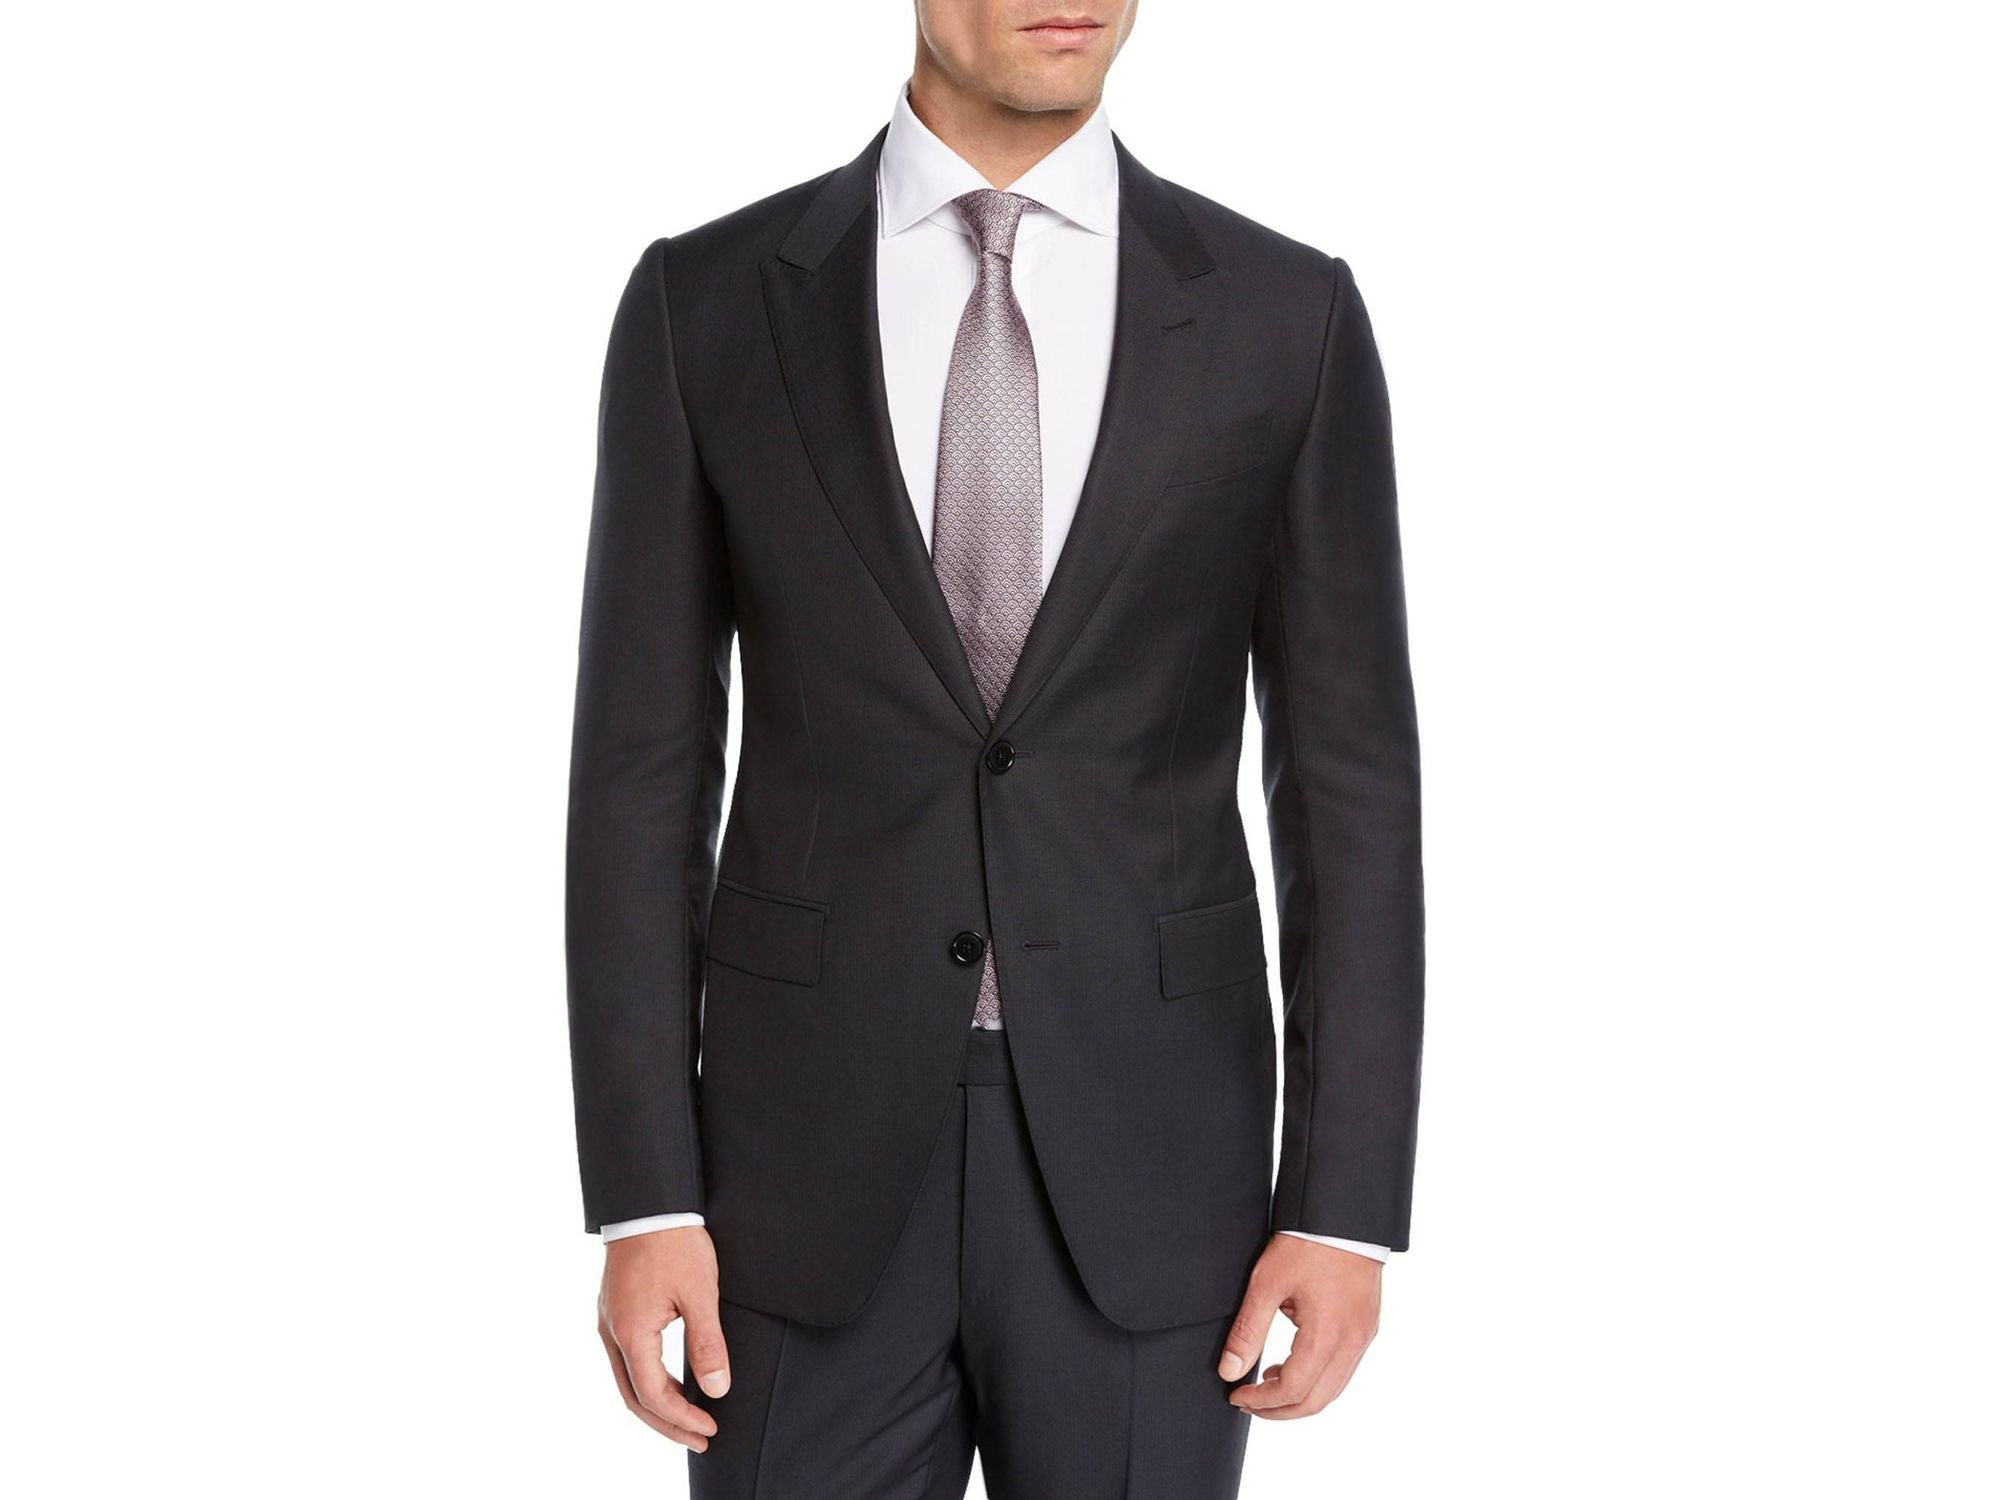 Rainwater's Luxury Collection Charcoal Peak Lapel Suit - Rainwater's Men's Clothing and Tuxedo Rental